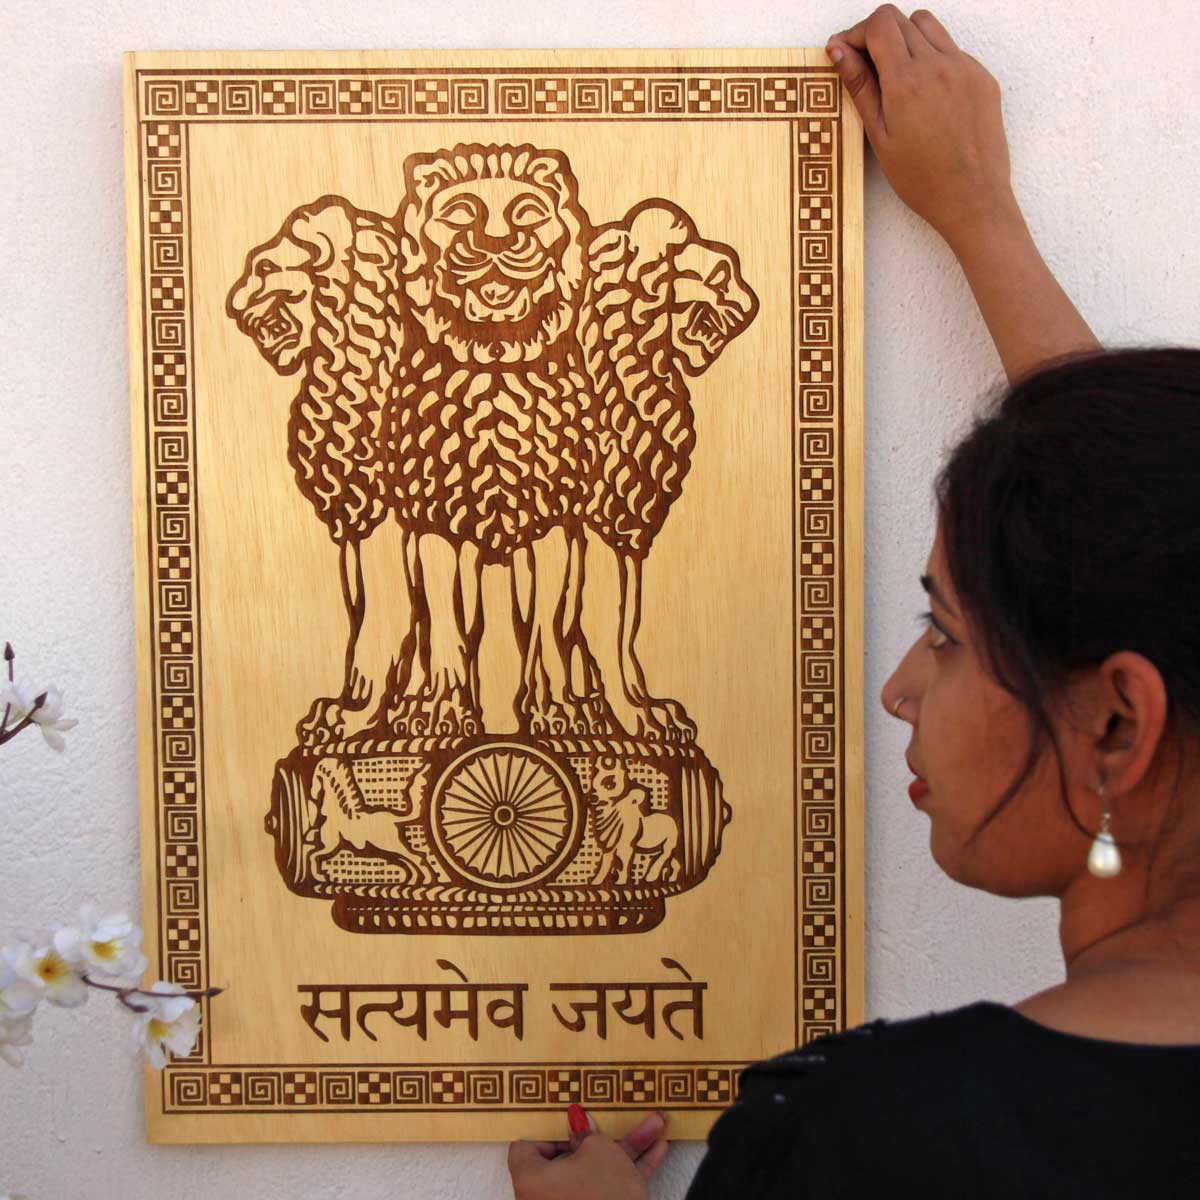 Amazon.com: Ashoka Stambh (The National Emblem of India) Hollow Wall  Hanging - Brass Statue : Home & Kitchen